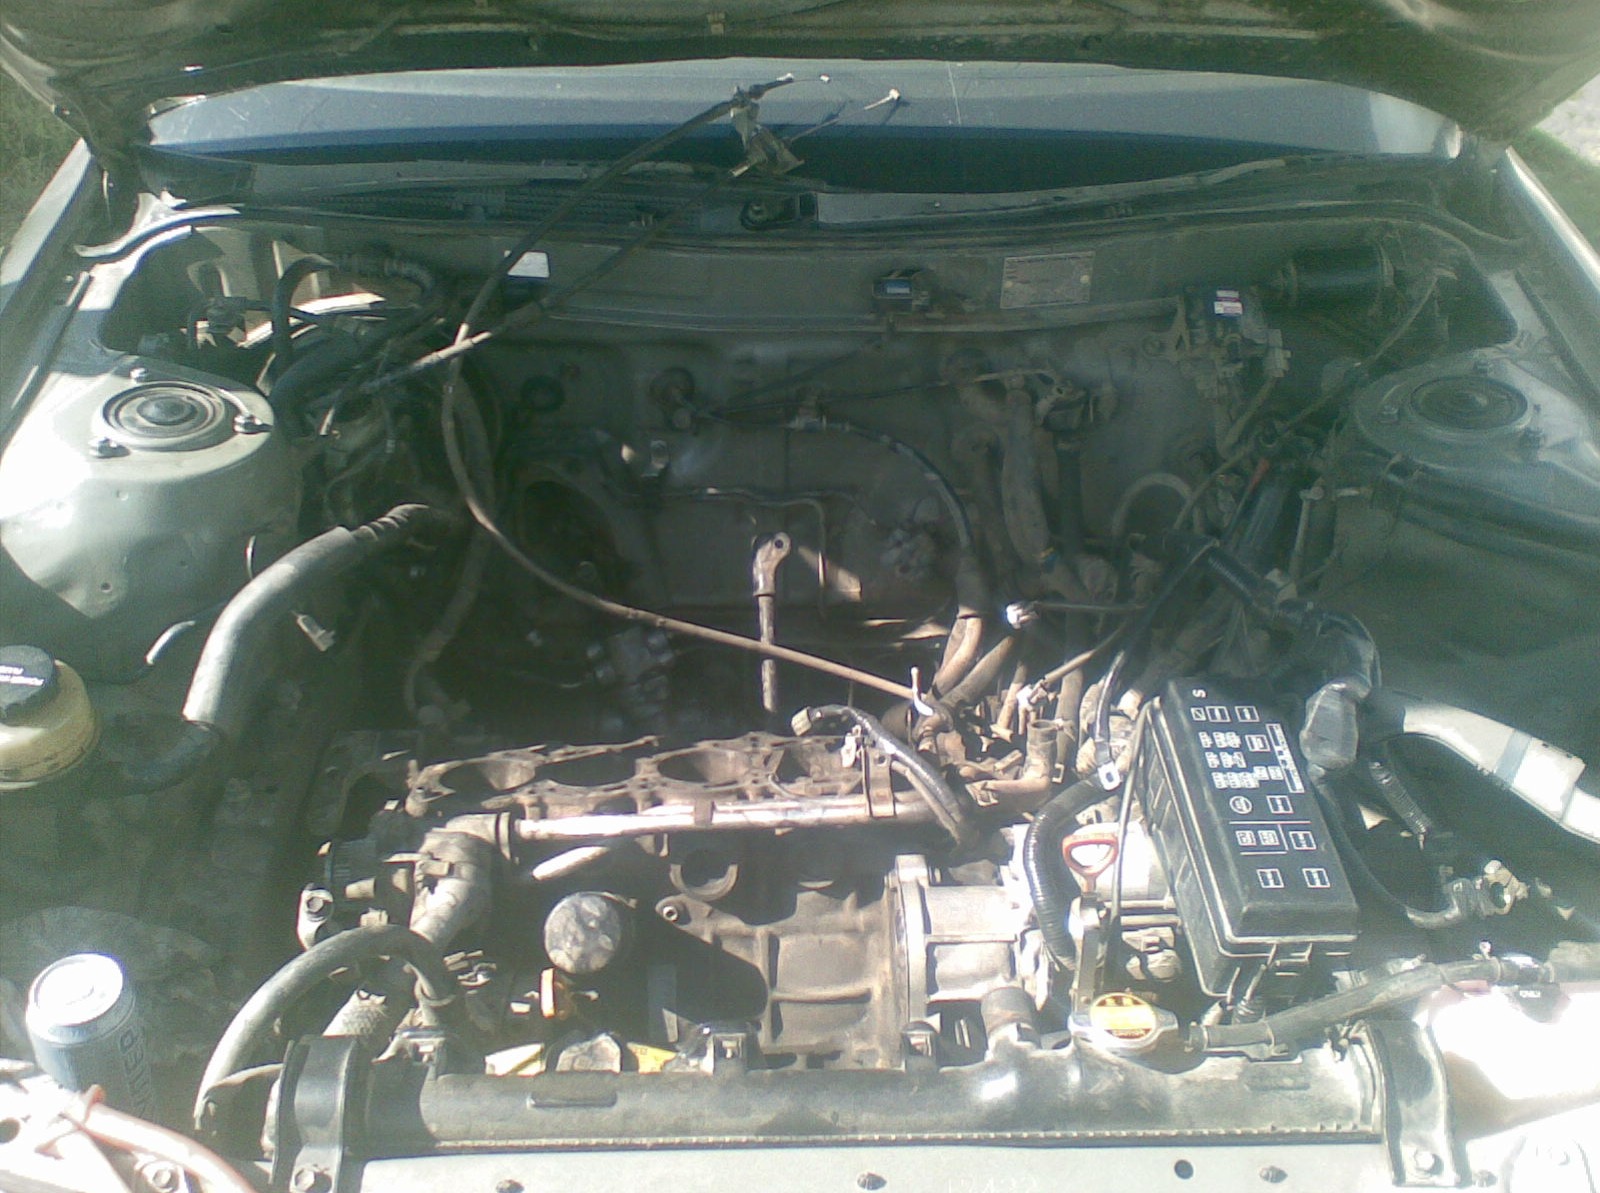    Toyota Camry 18 1991